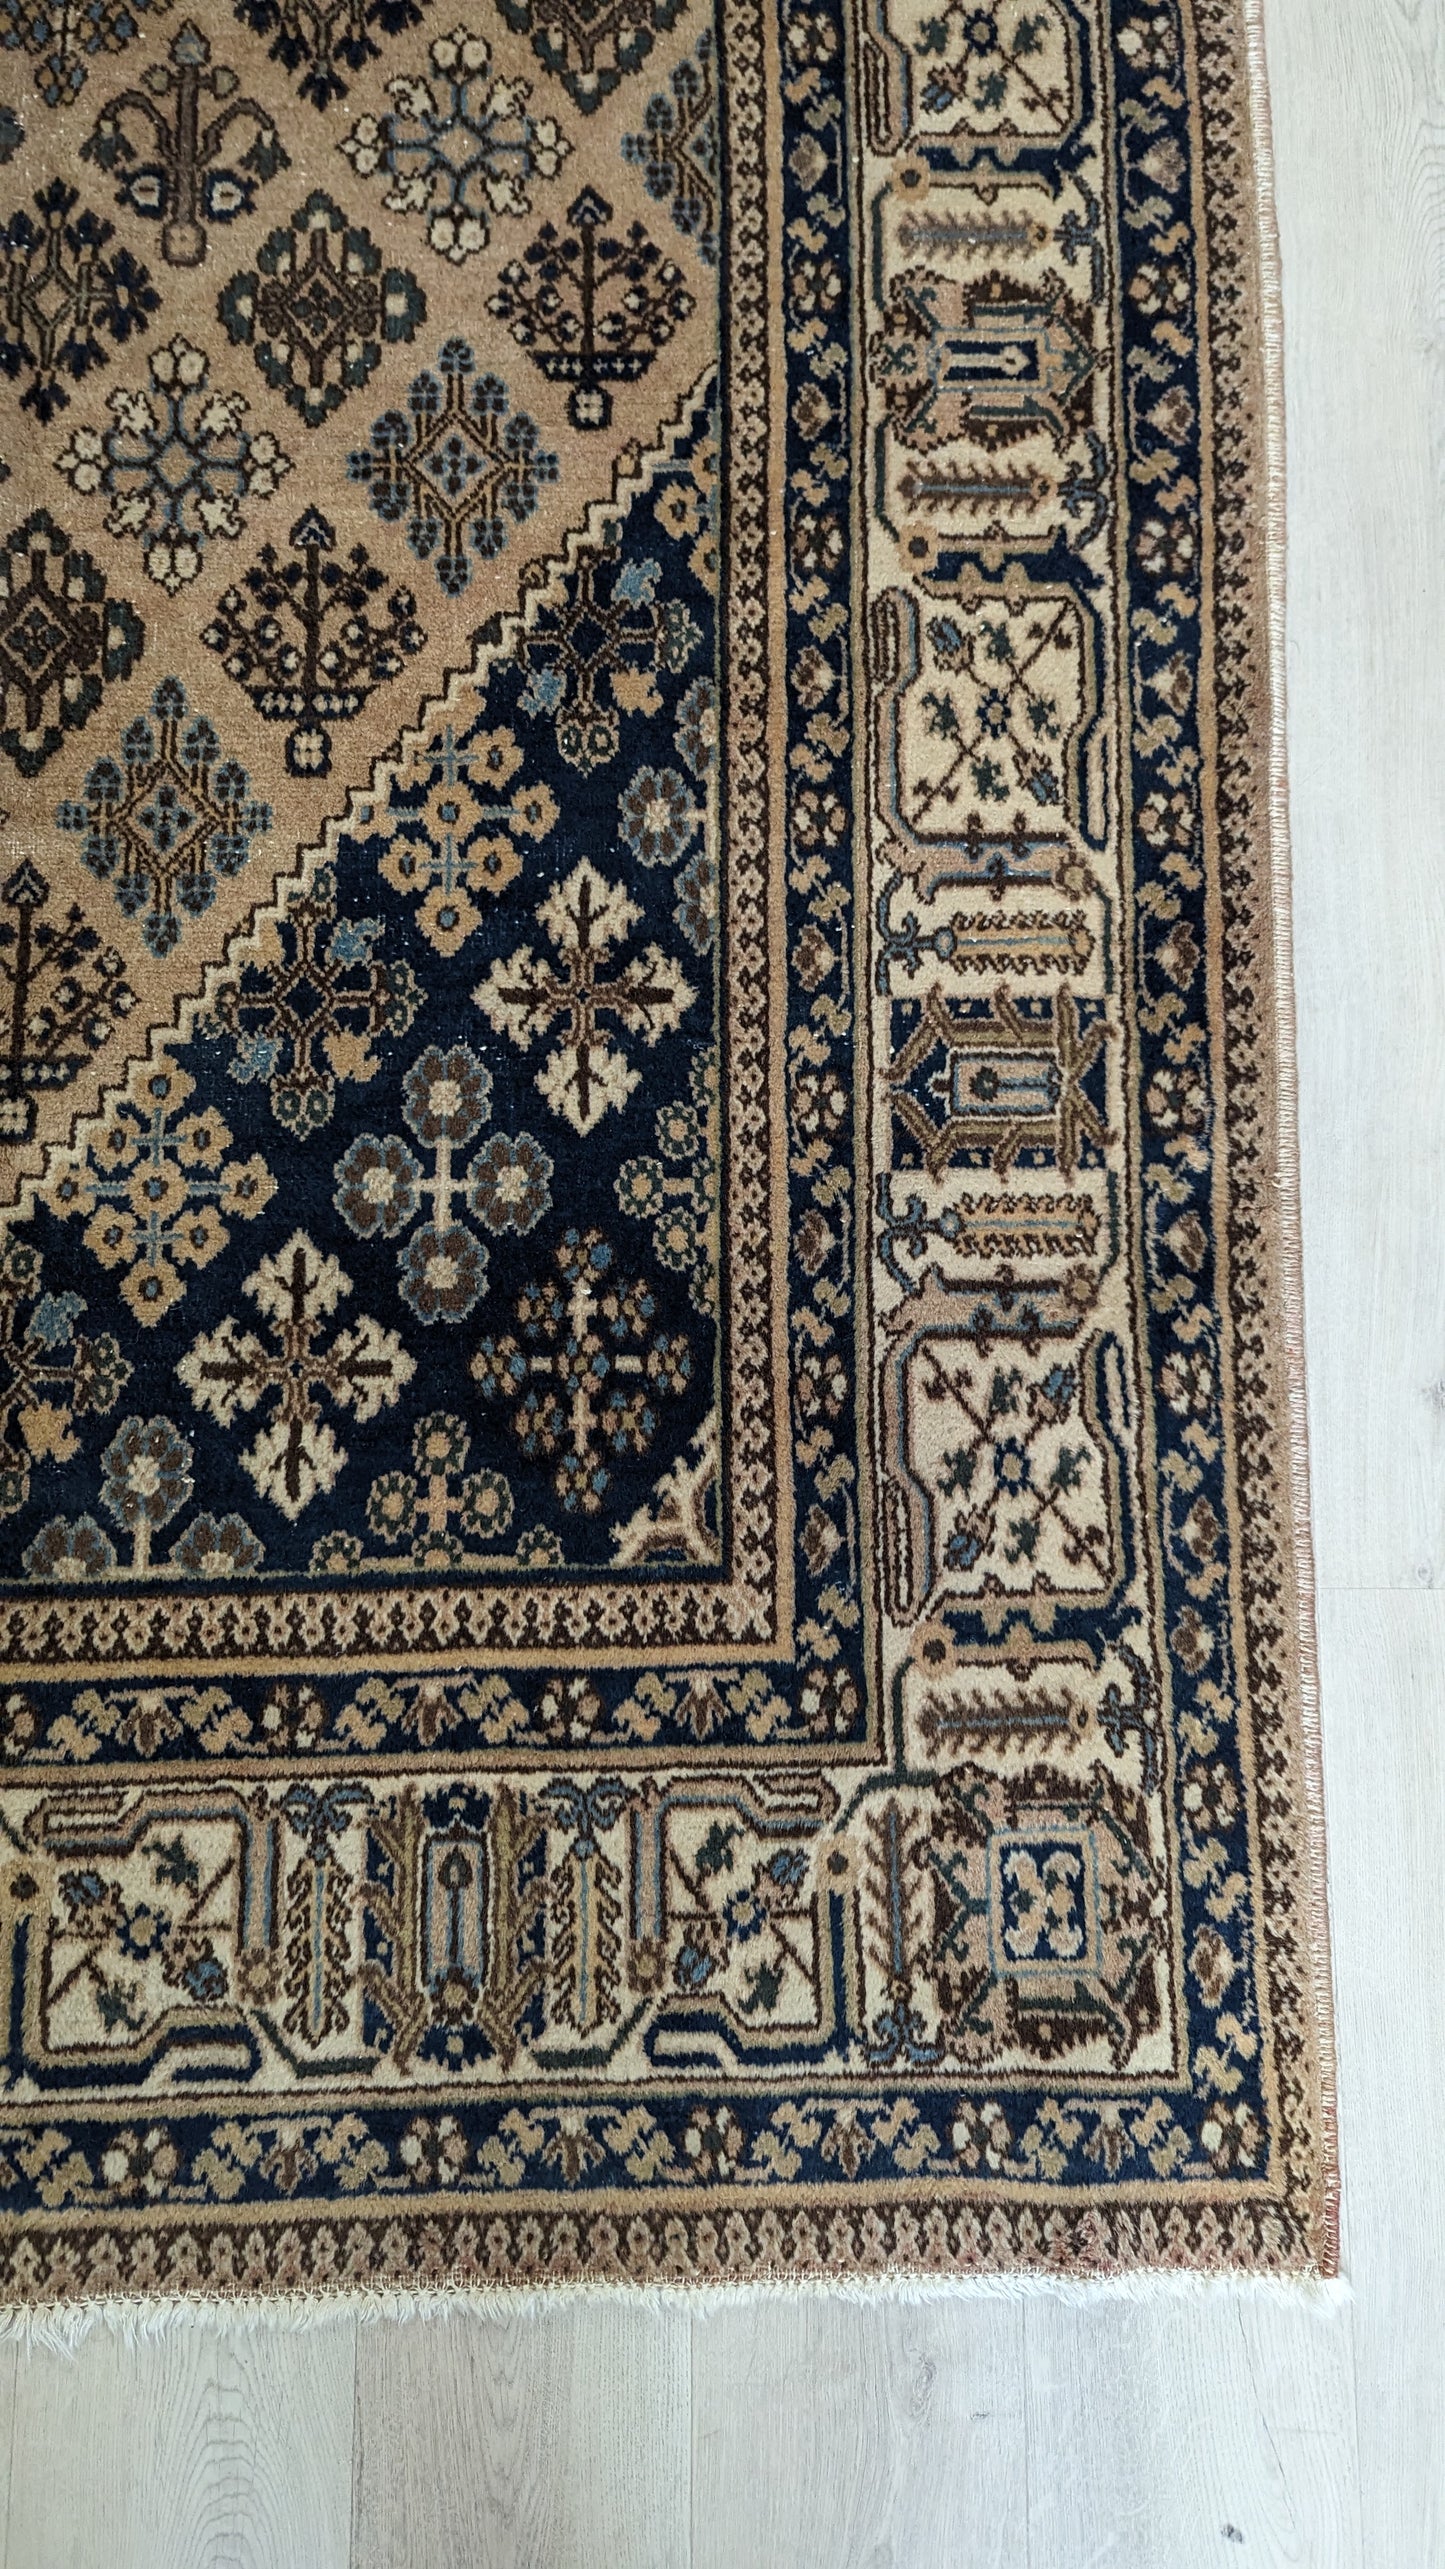 SOLD Vintage Persian Geometric Rug, 8x11